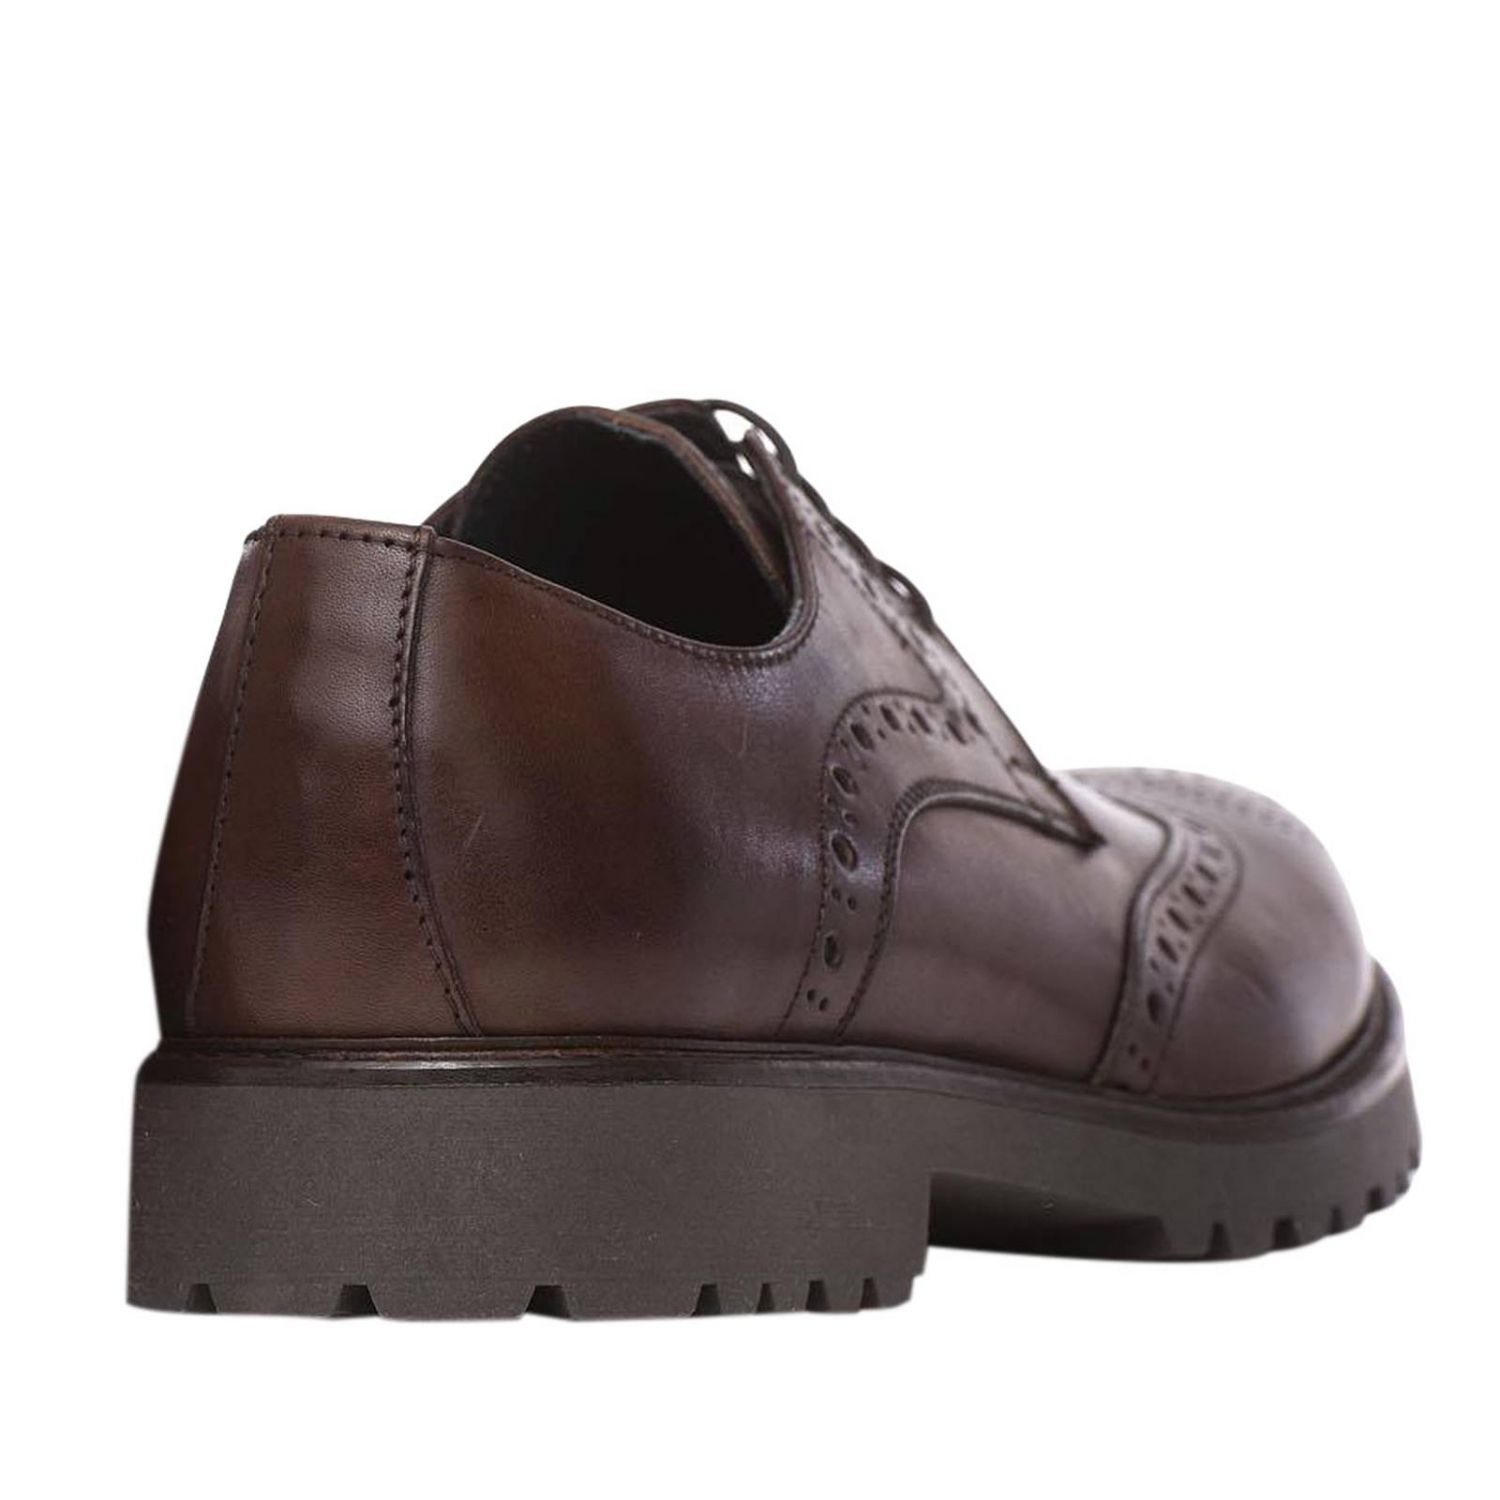 Pollini Outlet: Brogue shoes men - Dark | Brogue Shoes Pollini ...